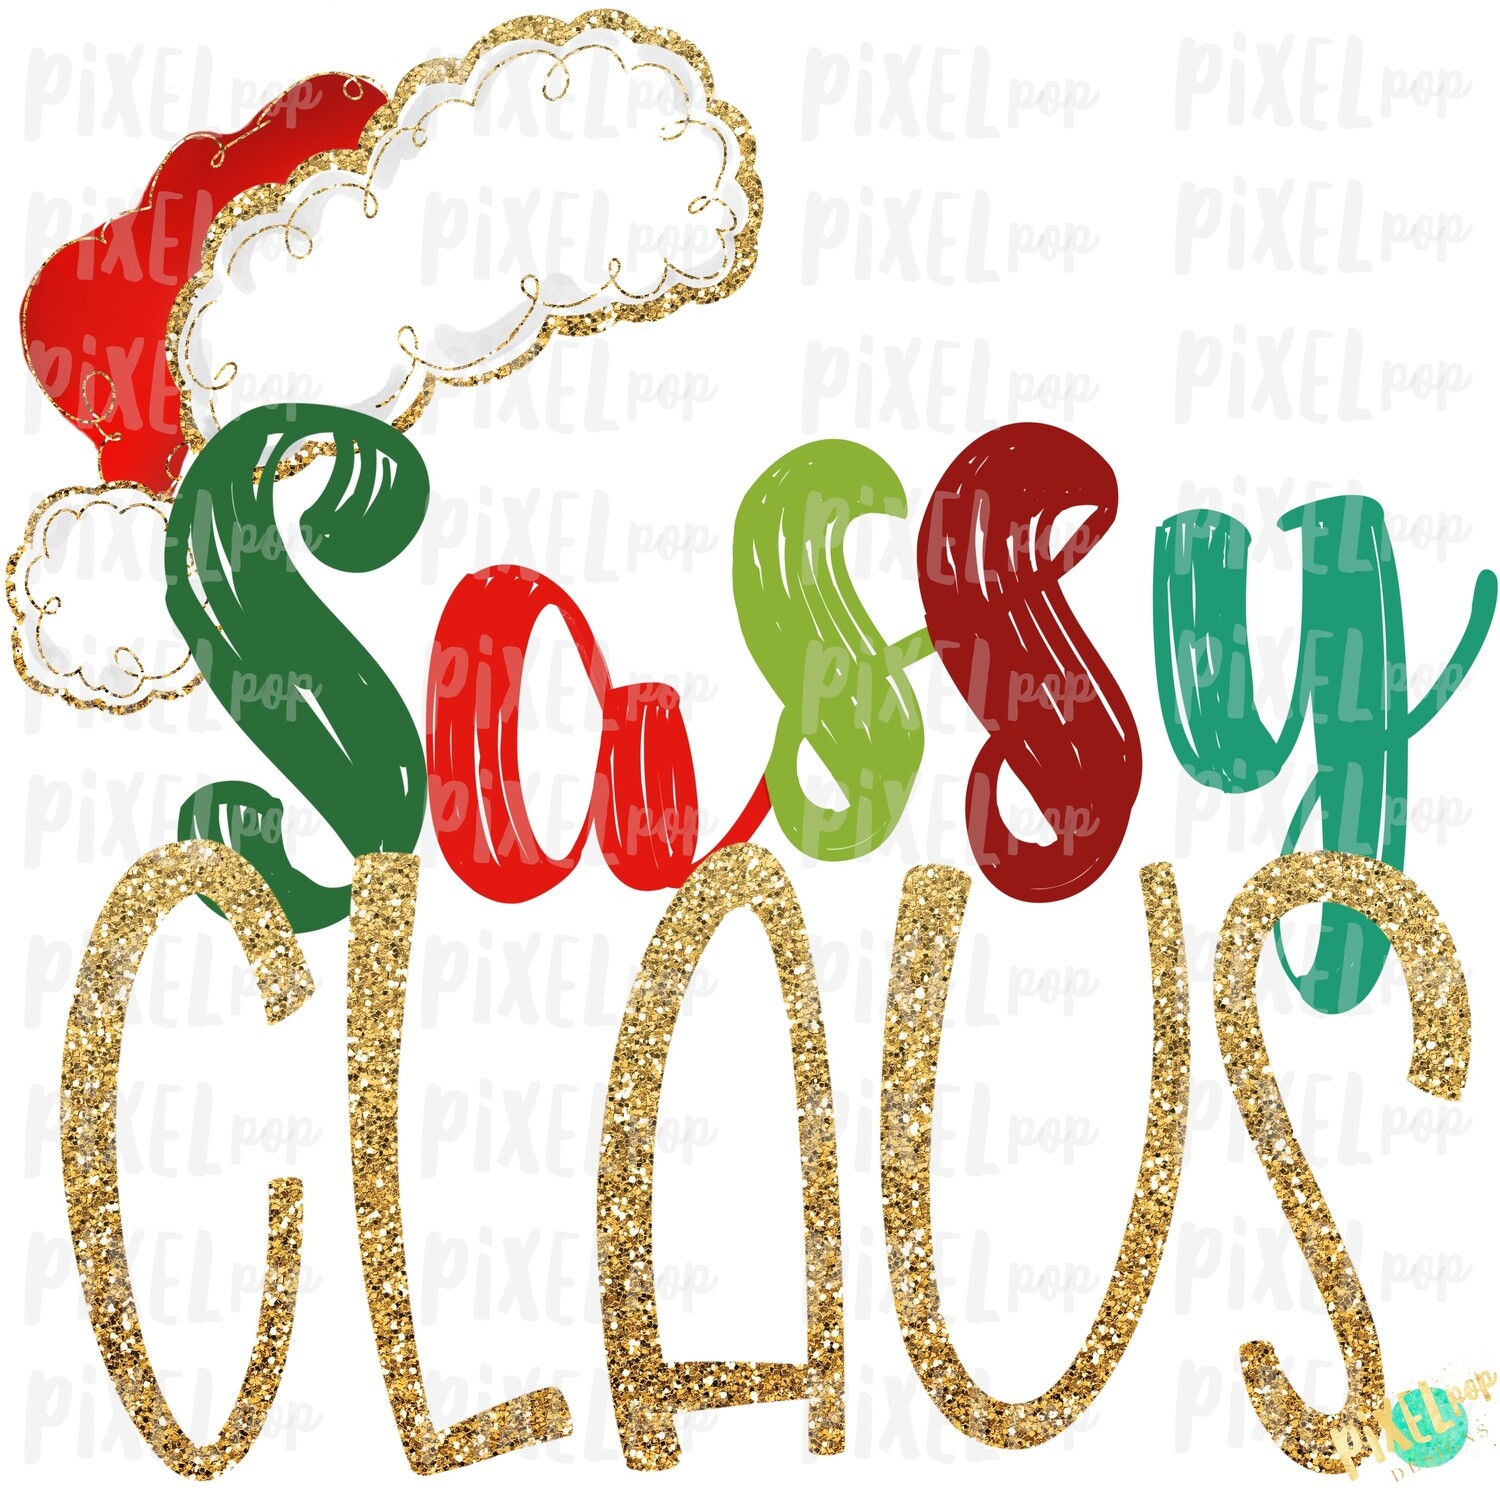 Sassy Claus Santa Hat Digital Watercolor Sublimation PNG Art | Drawn Design | Sublimation PNG | Digital Download | Printable Artwork | Art